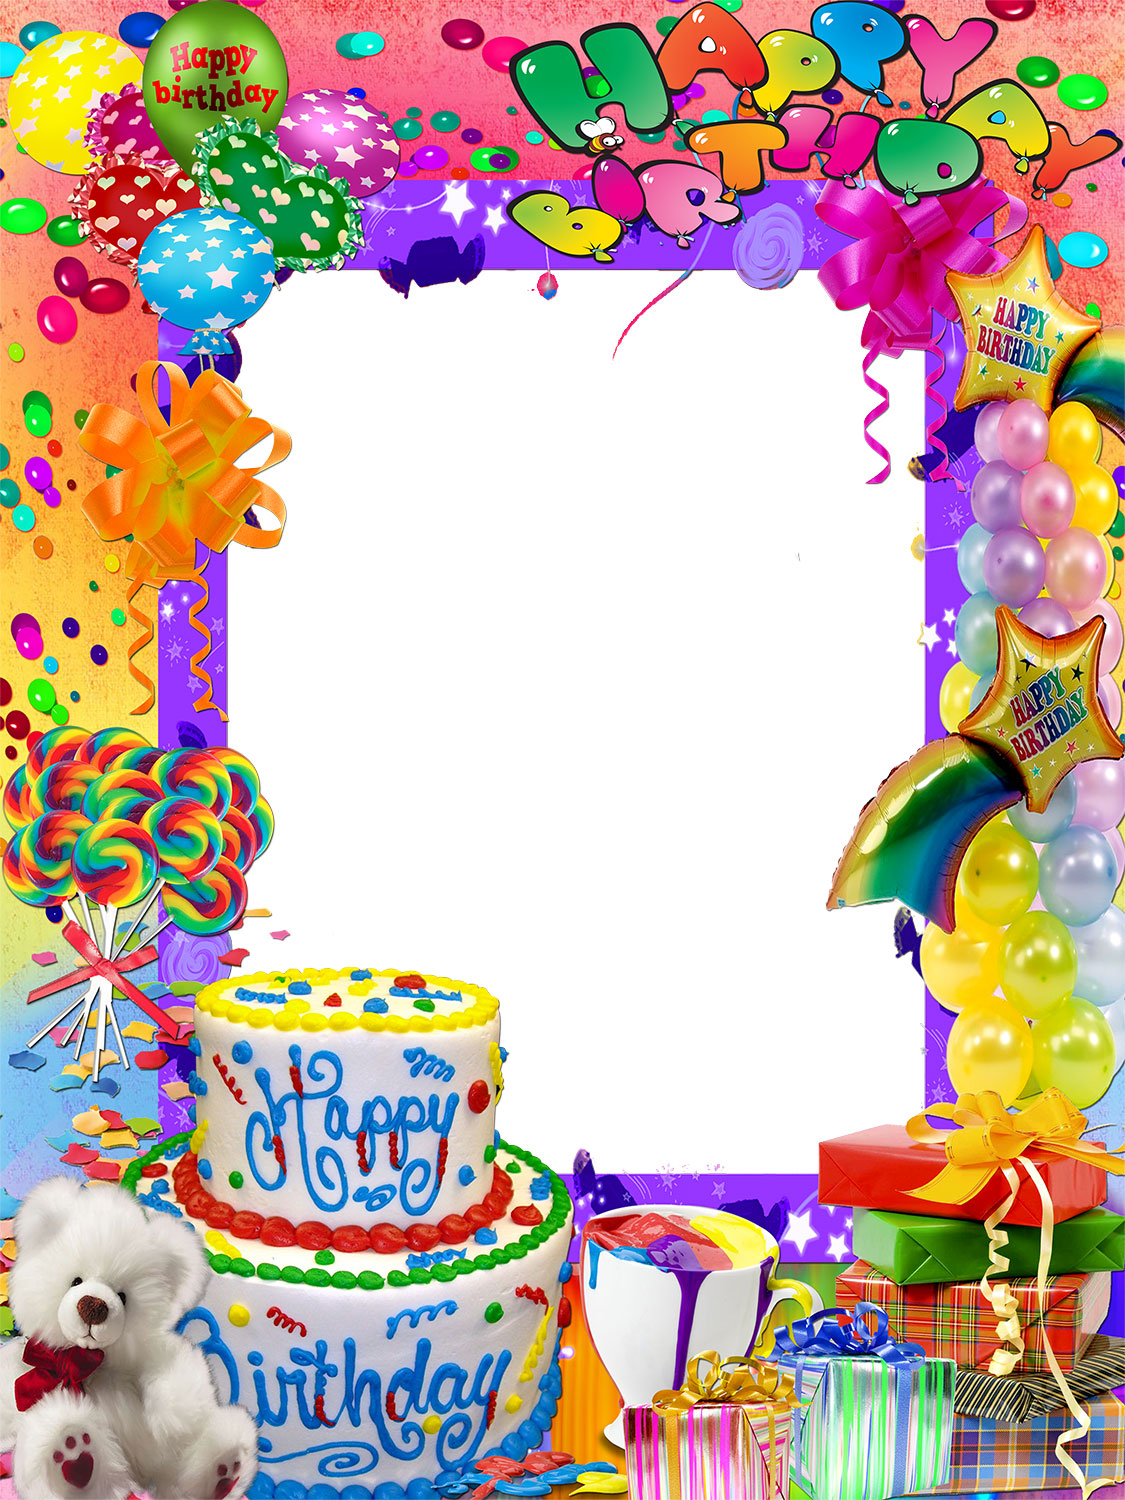 Happy Birthday Photo Frames Editing Online - MGP Animation